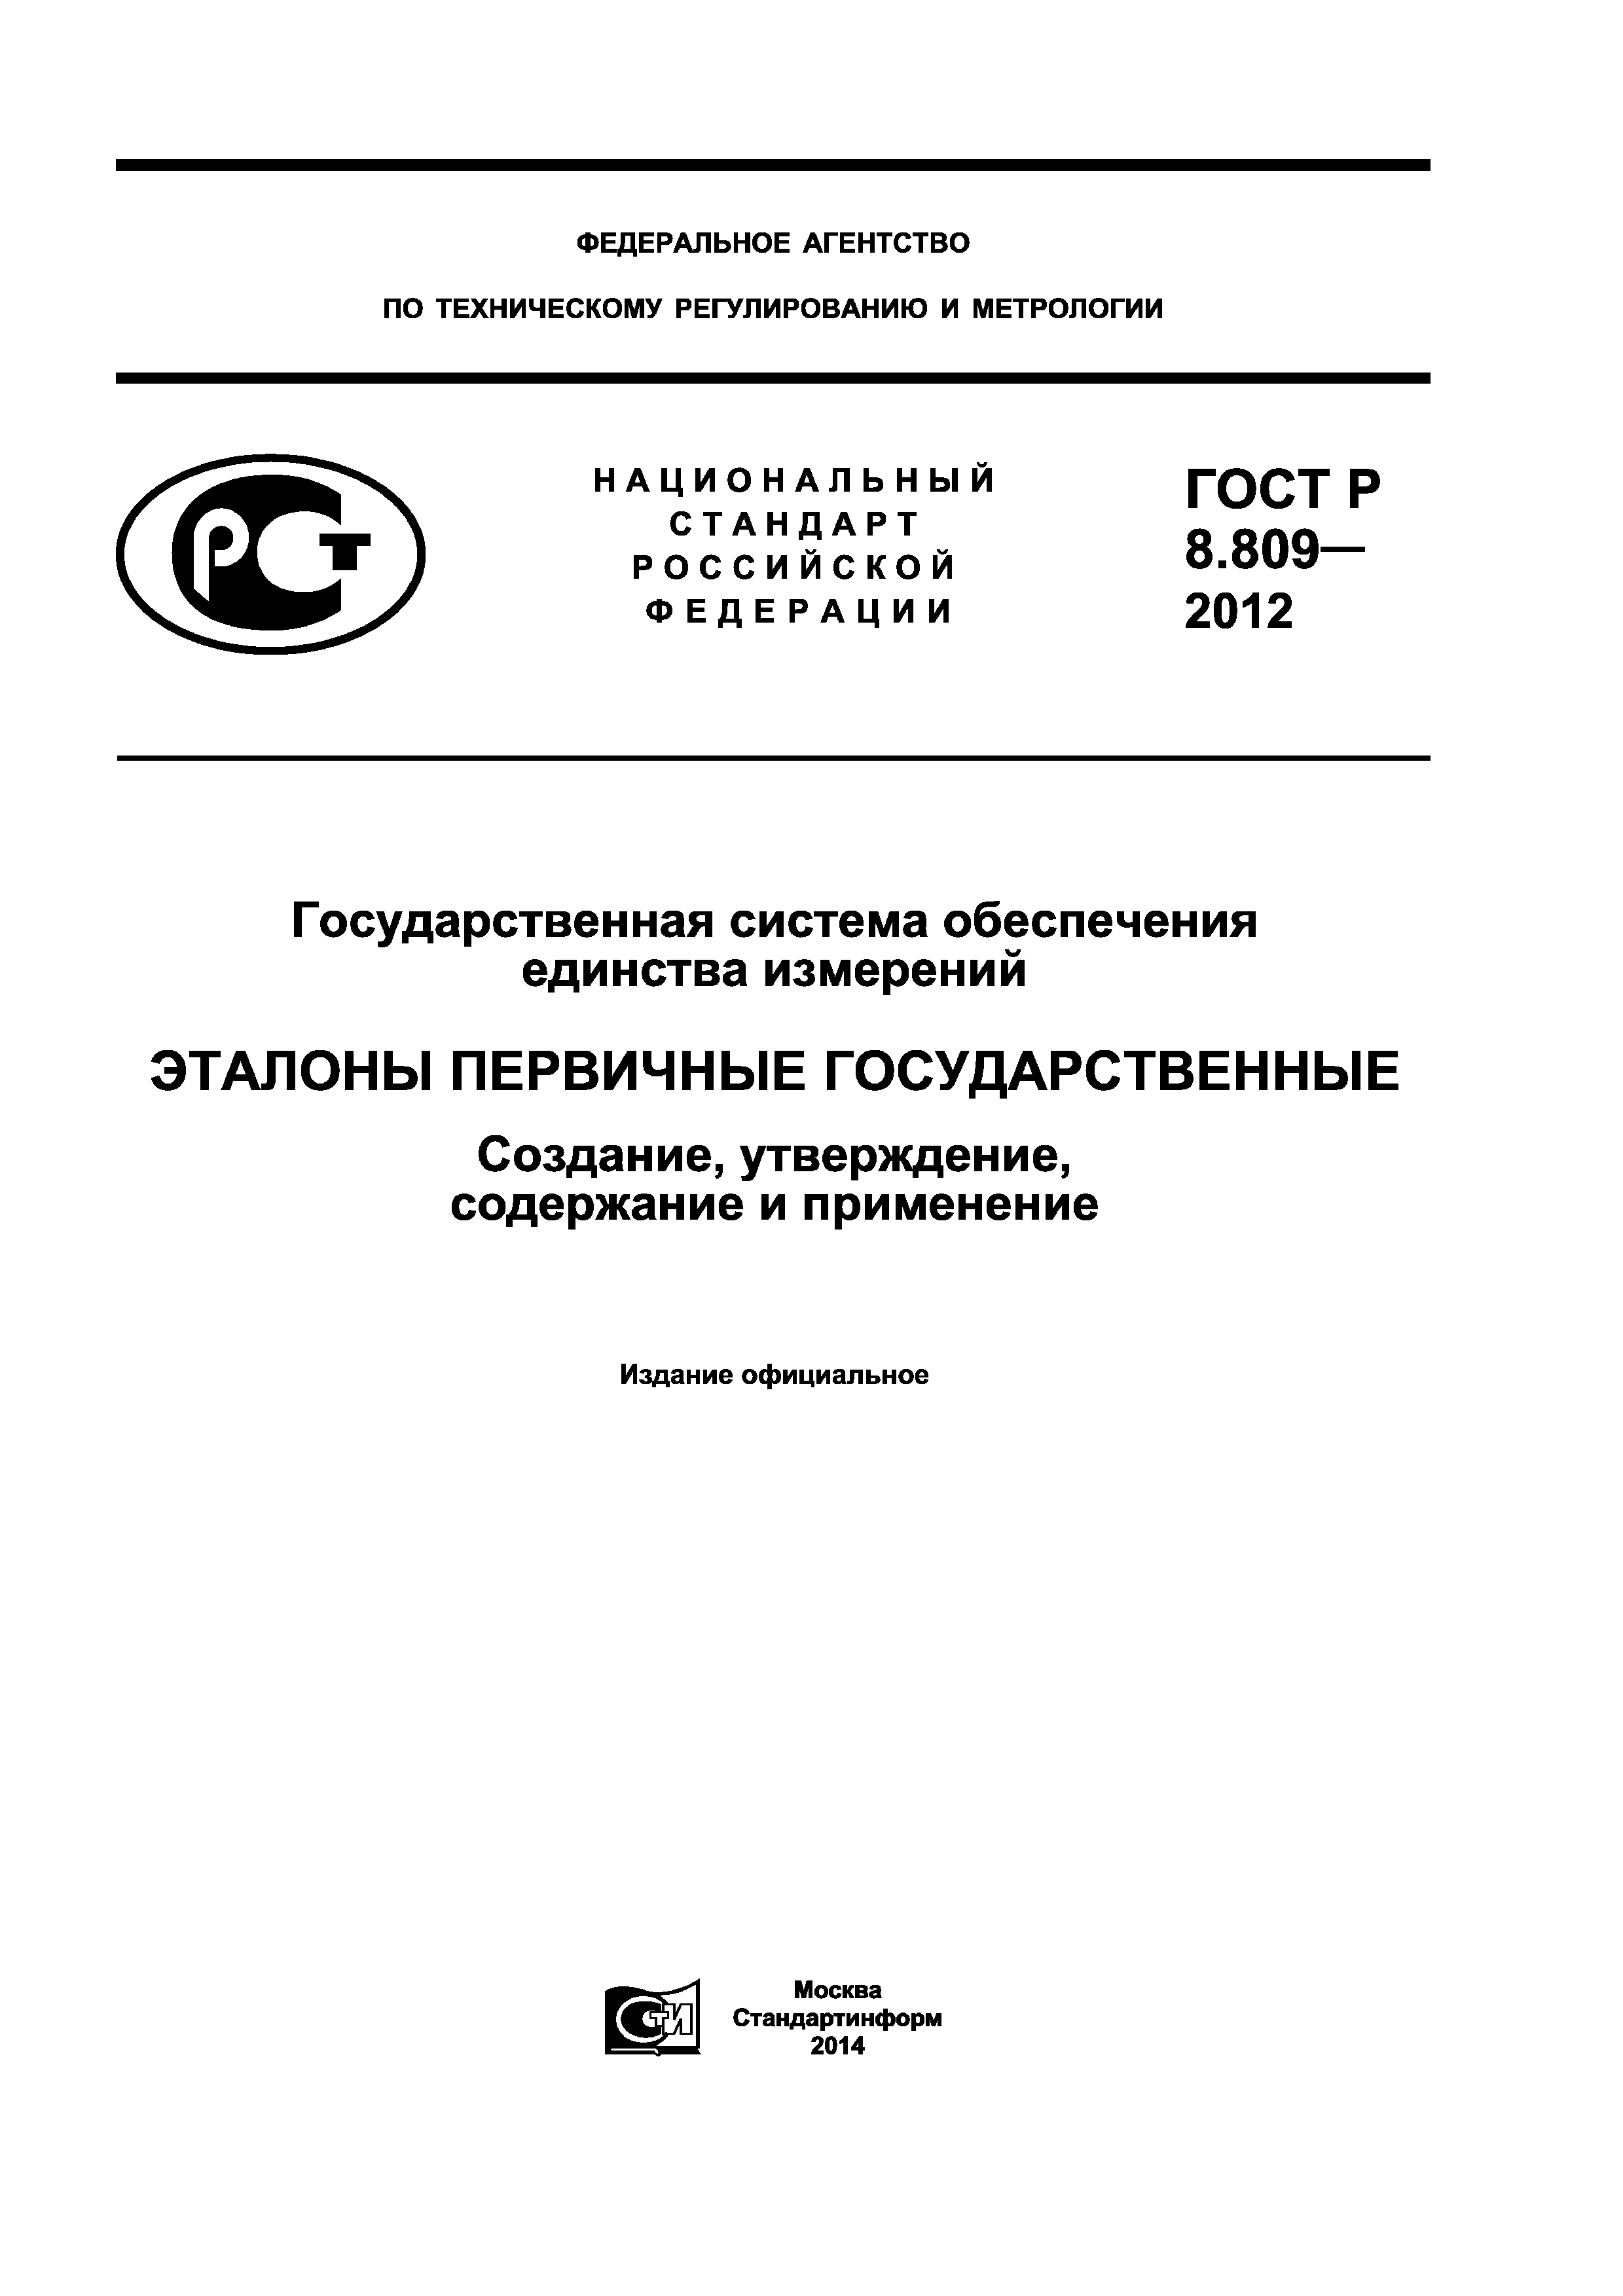 ГОСТ Р 8.809-2012